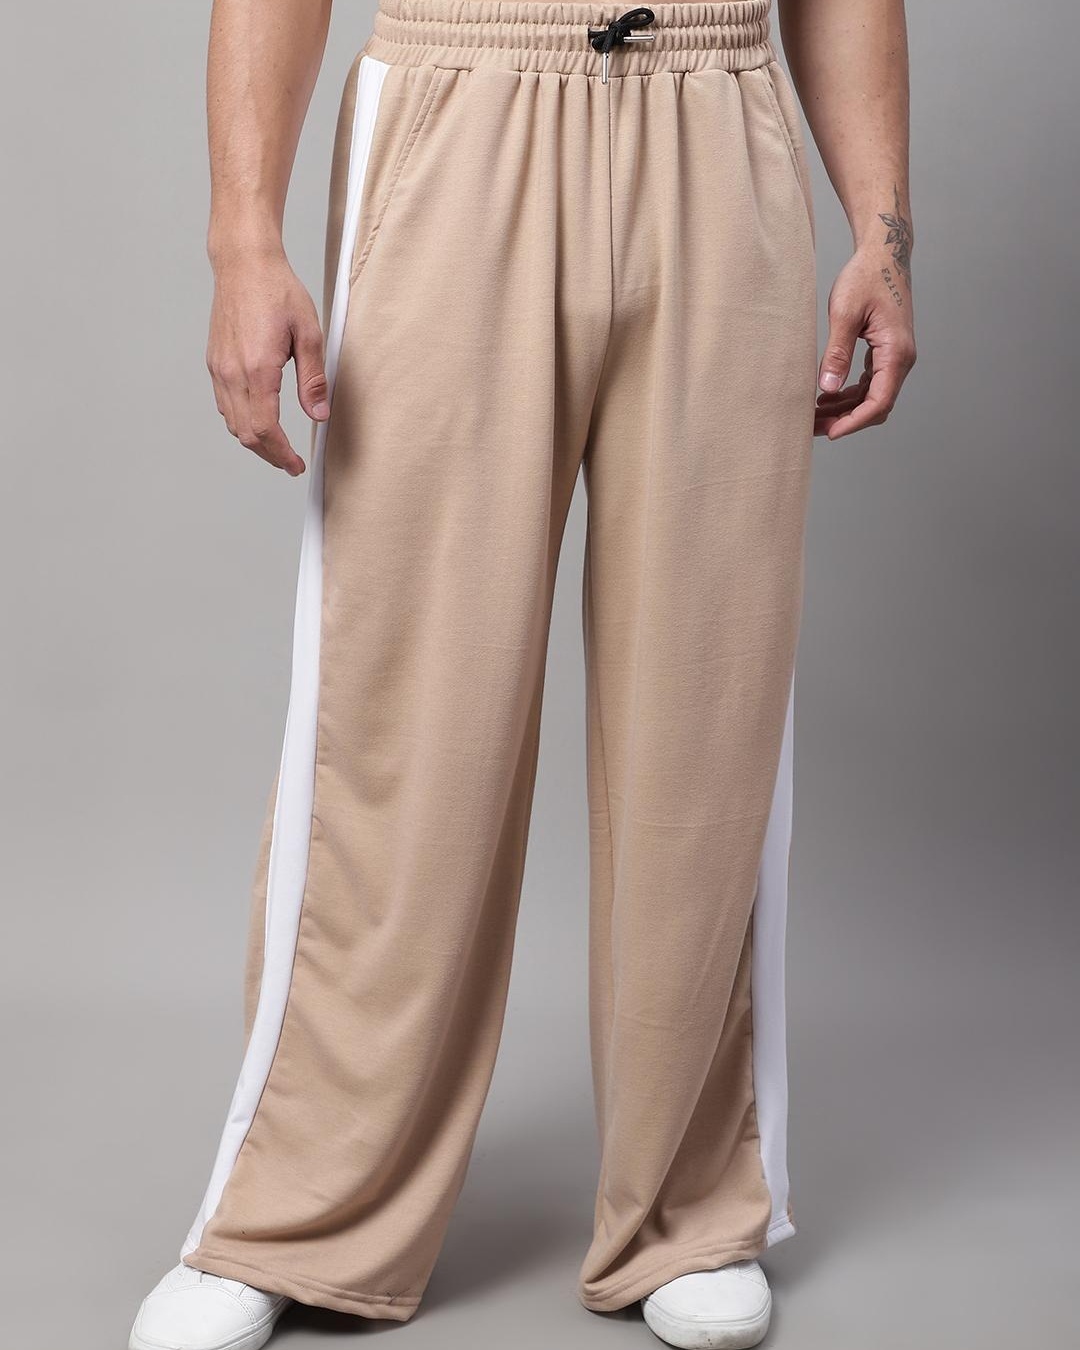 Men's Comfort Fit Pants With Side Stripes In Beige